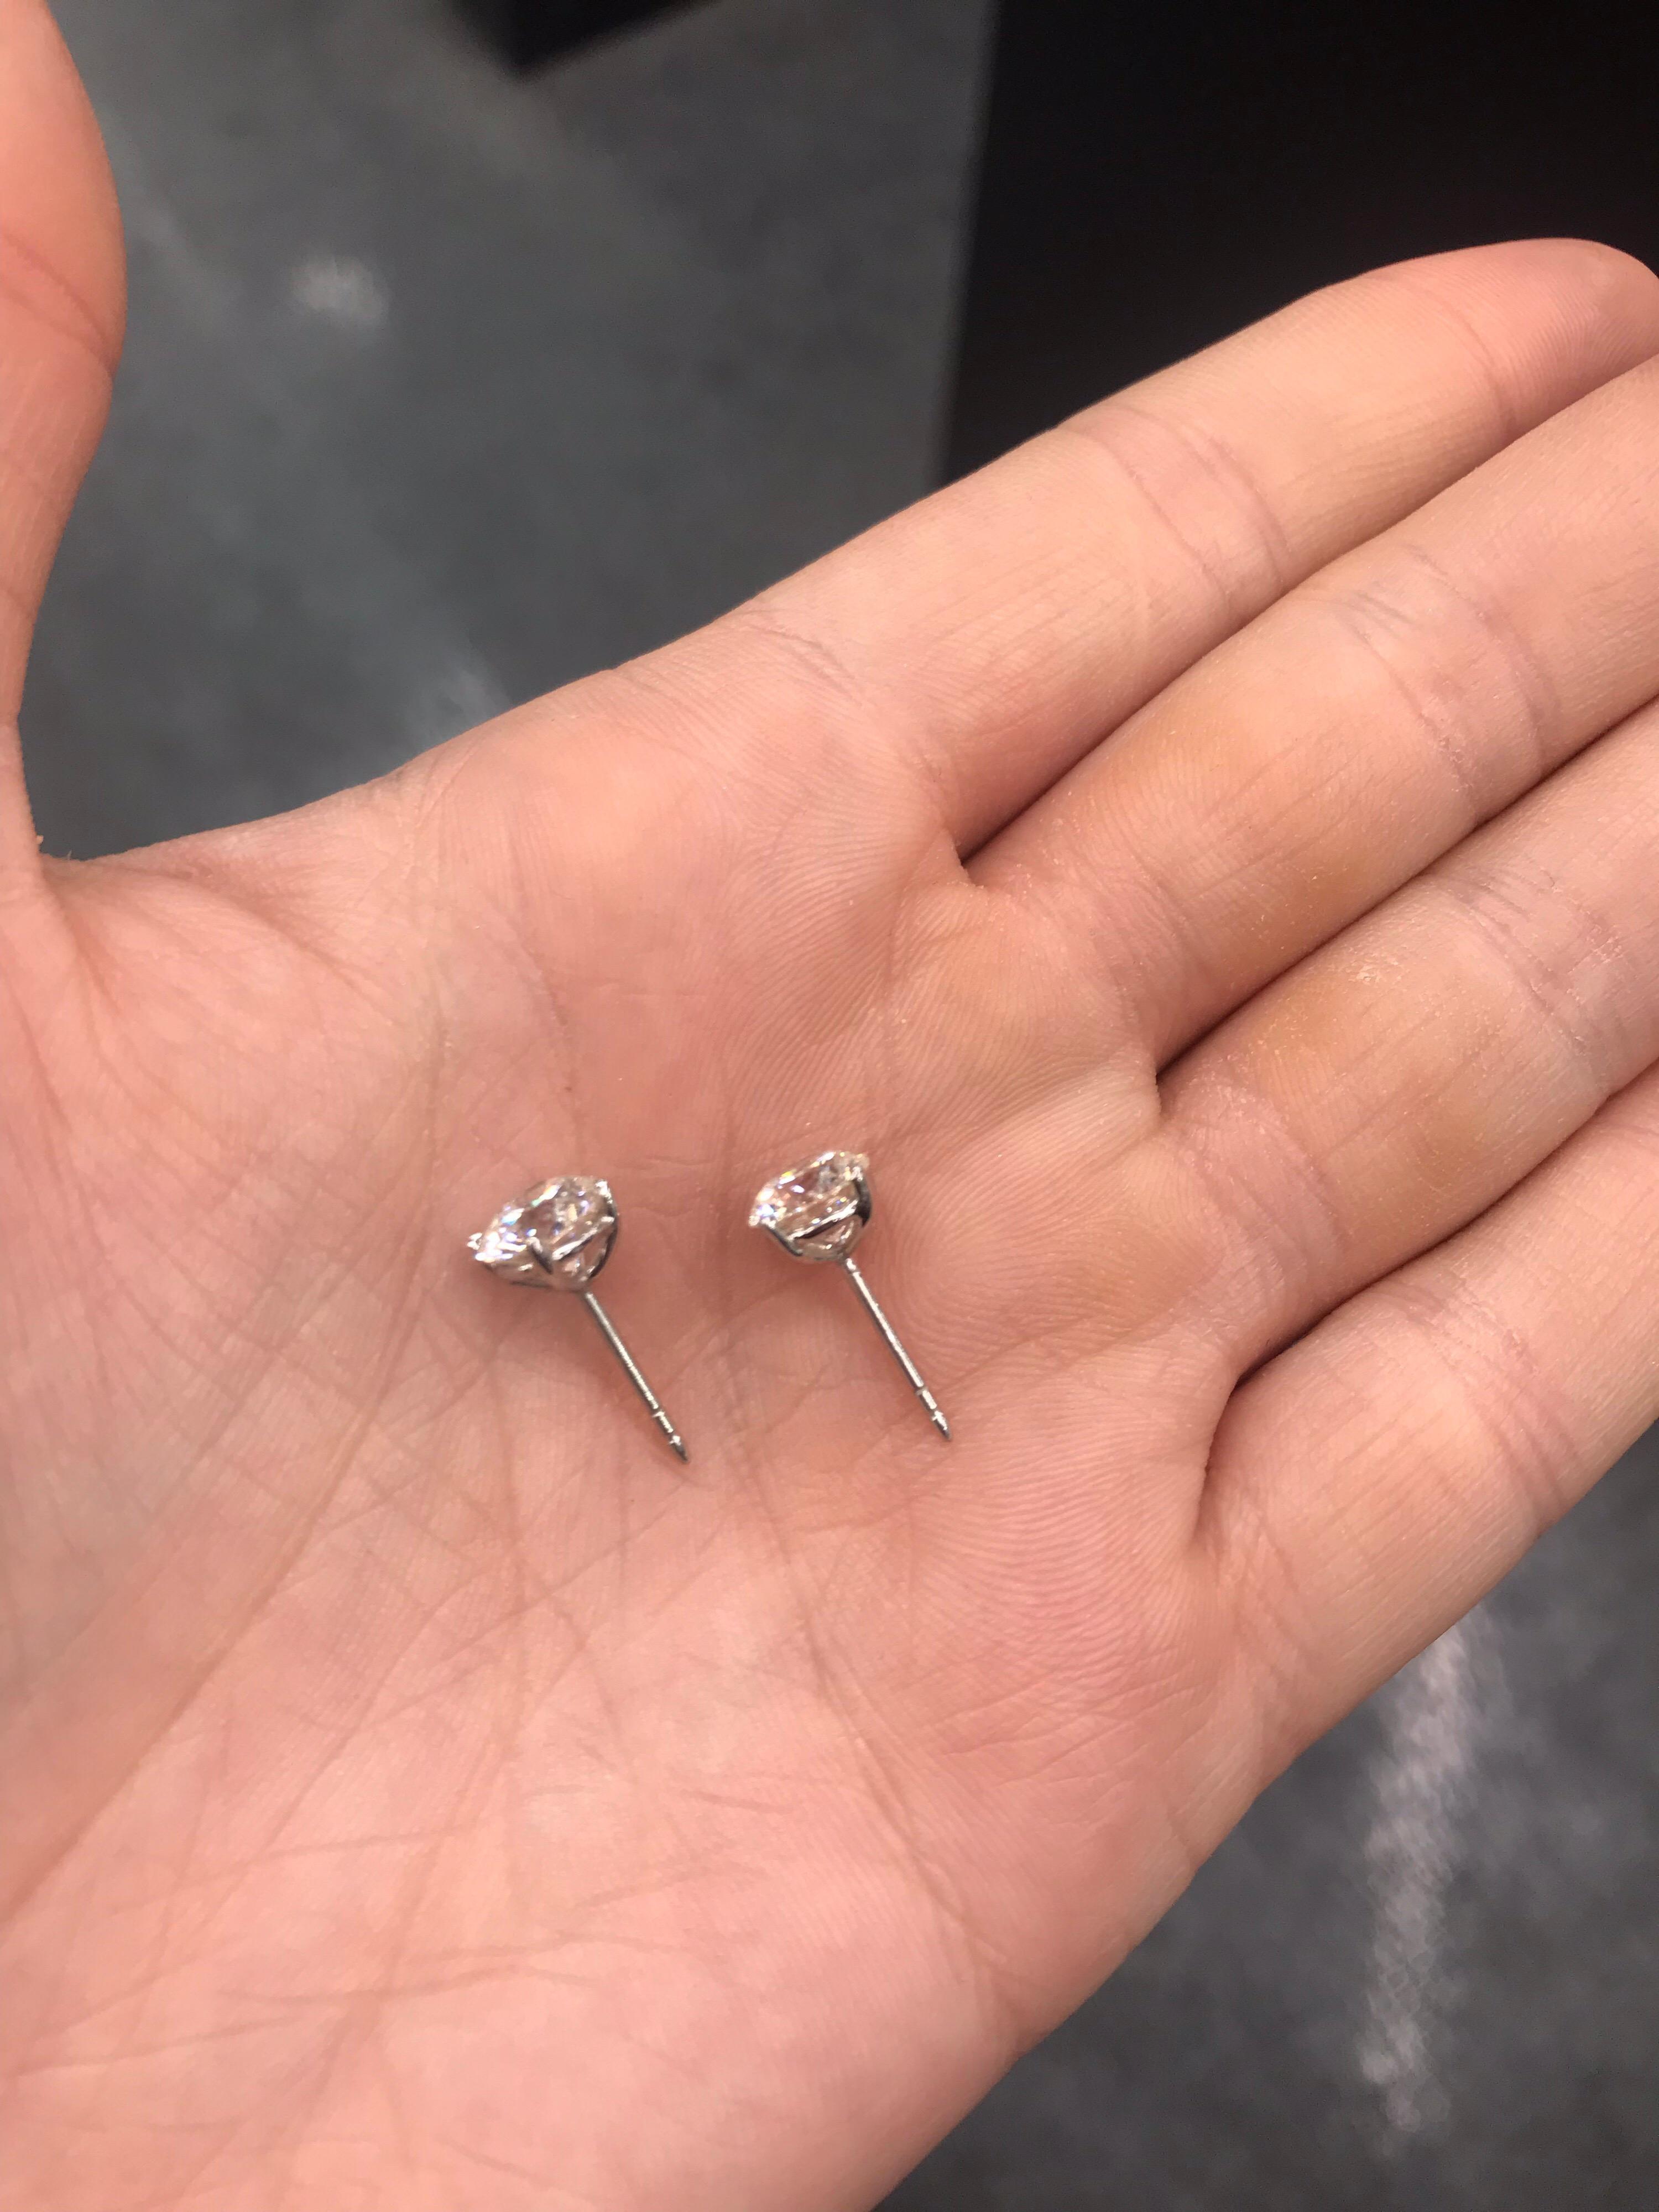 diamond earring size comparison